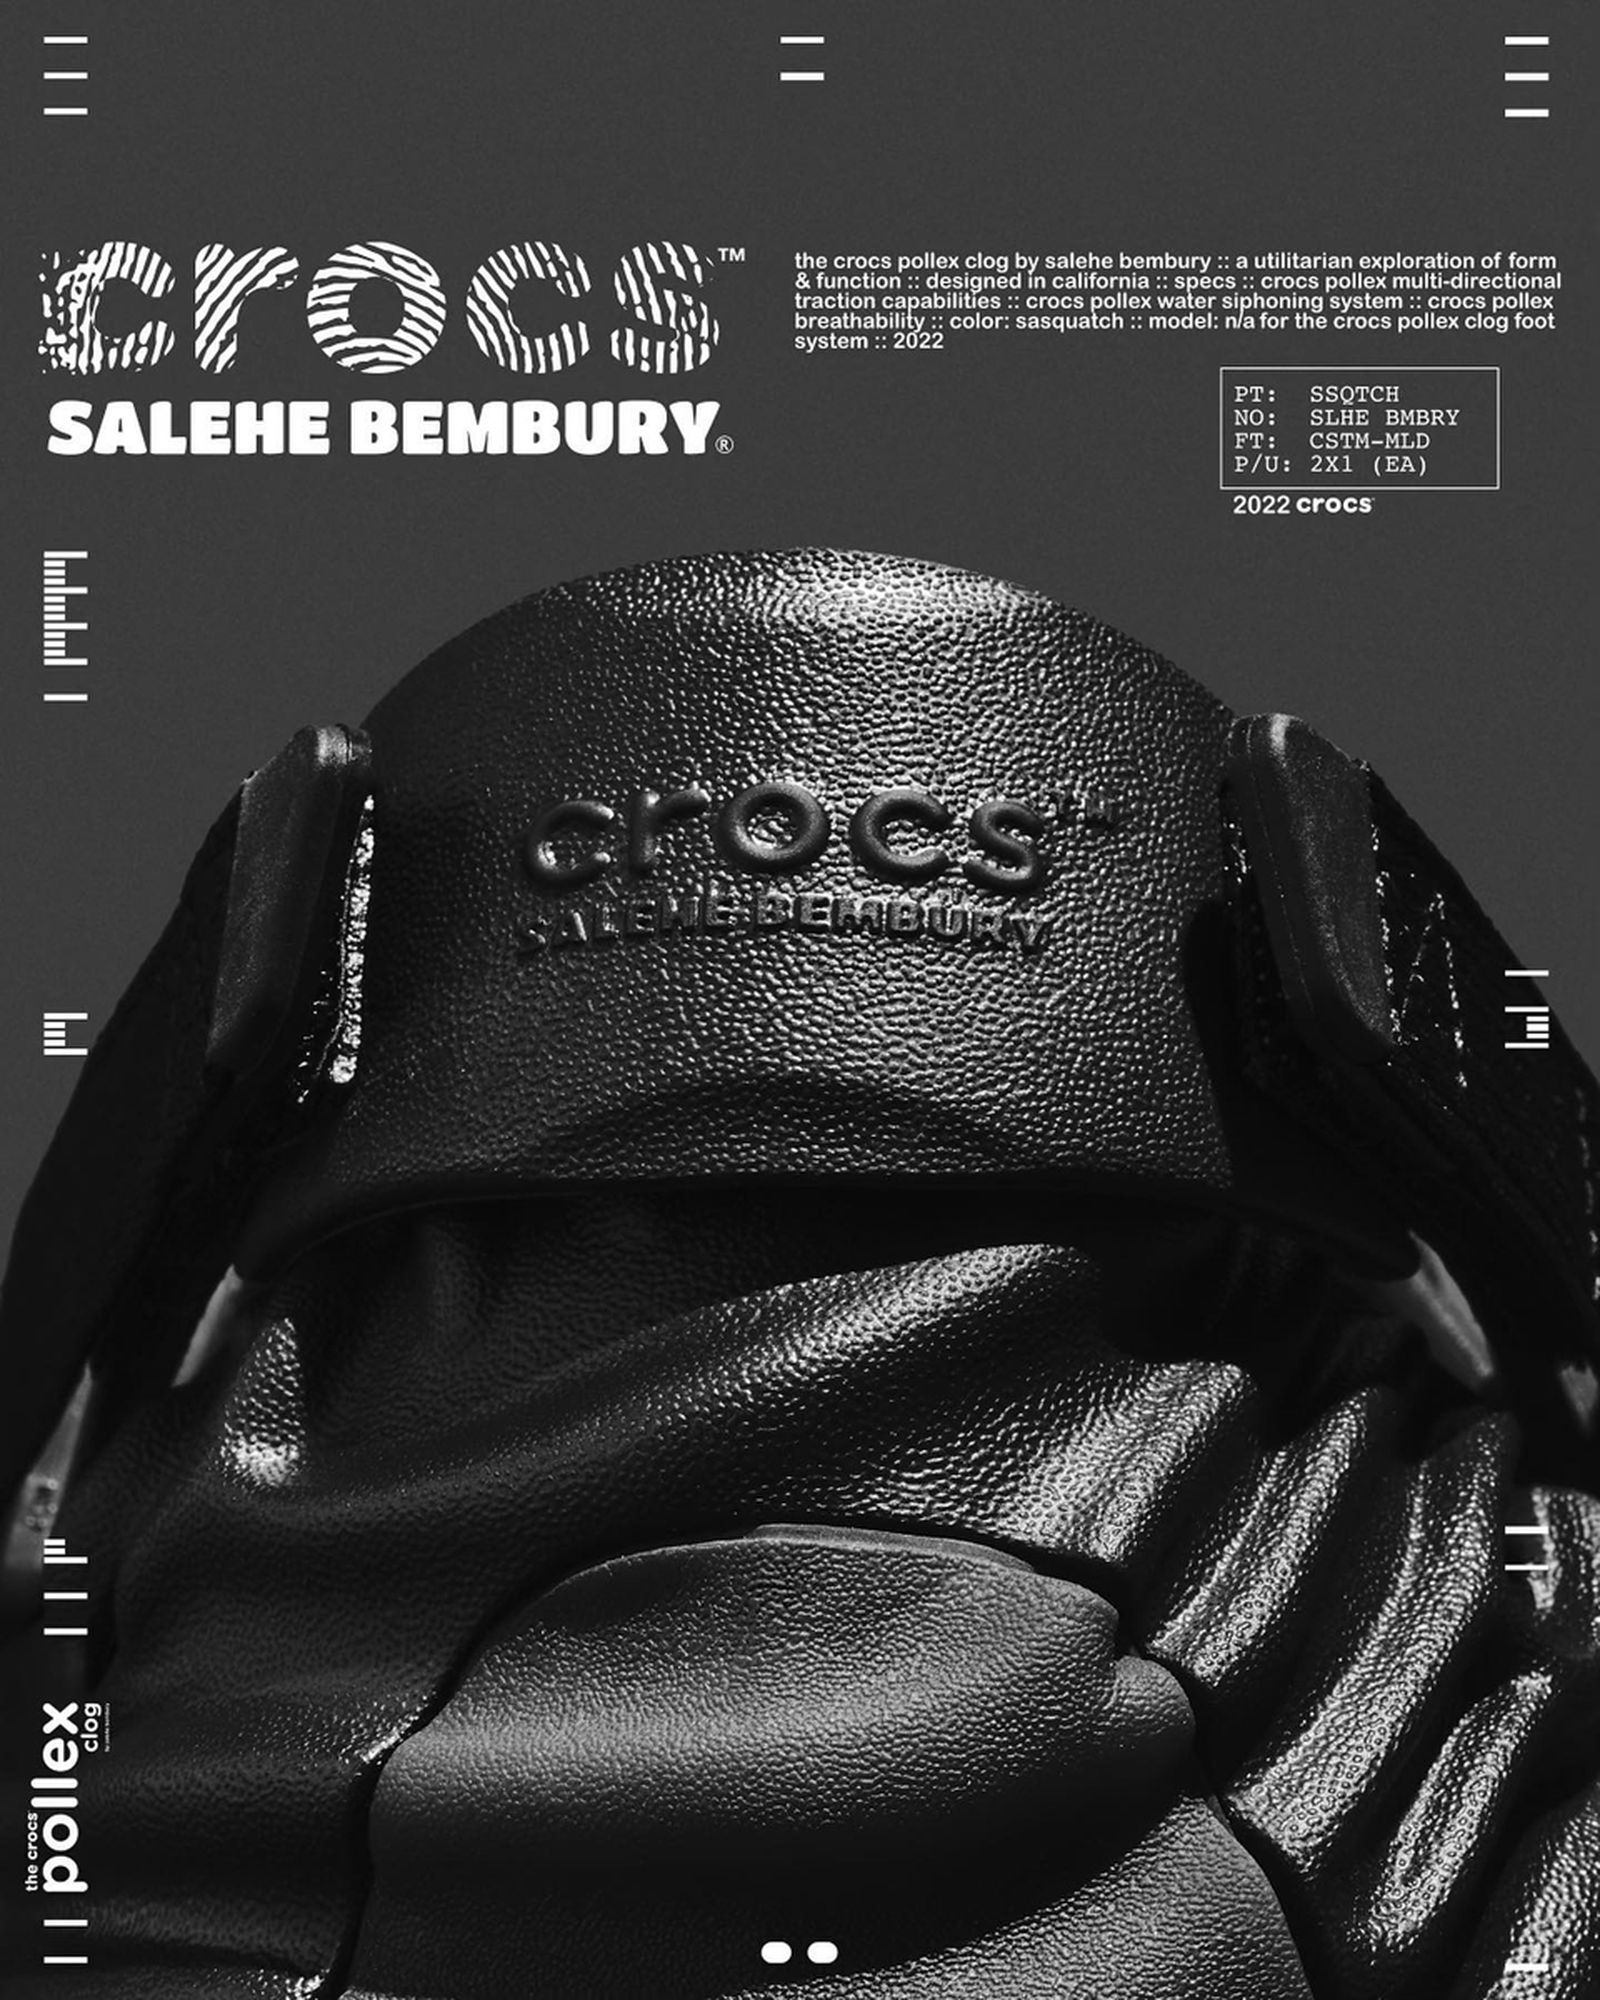 Salehe Bembury's Black Crocs Clogs Are Finally Releasing